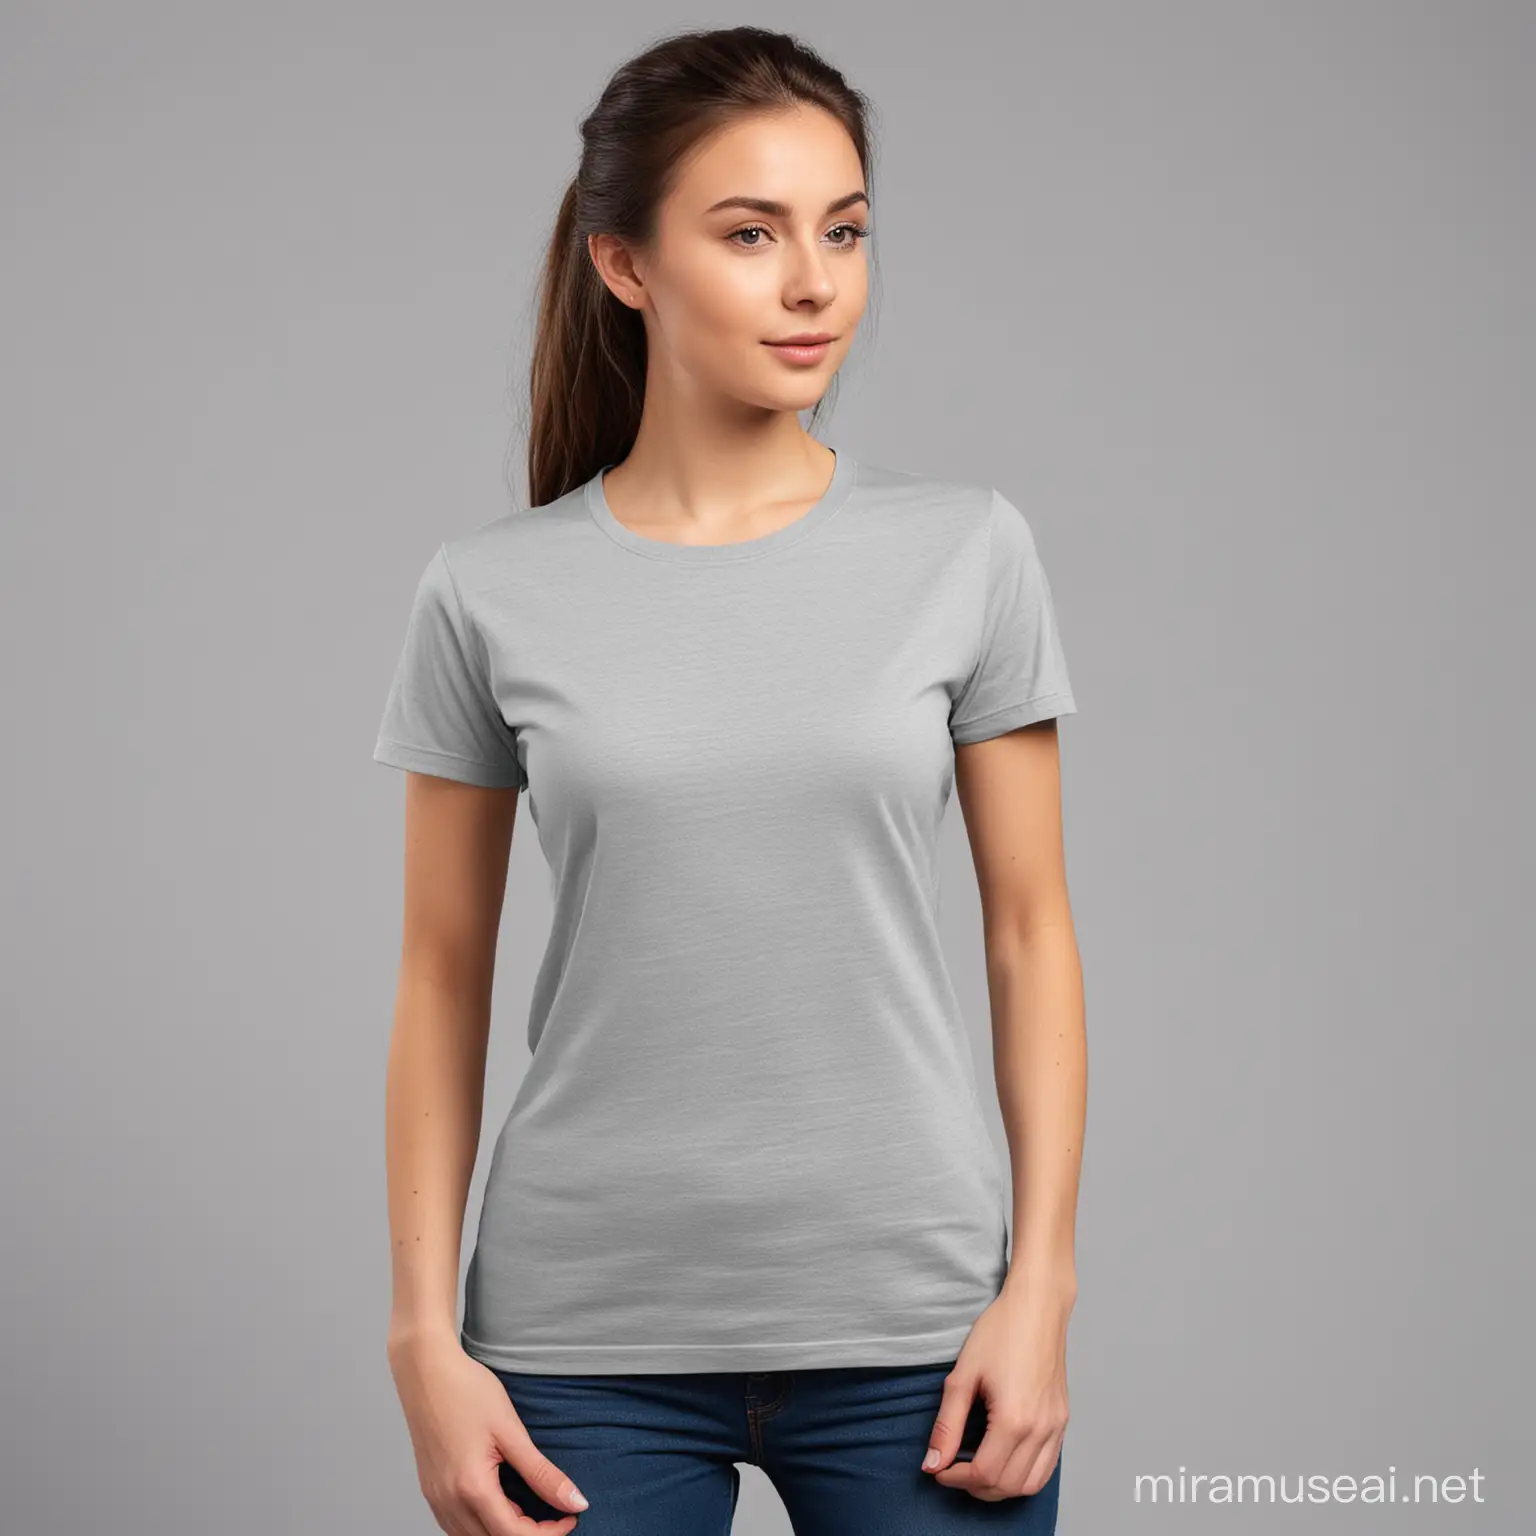 Girl Wearing Plain Gray ShortSleeved Shirt